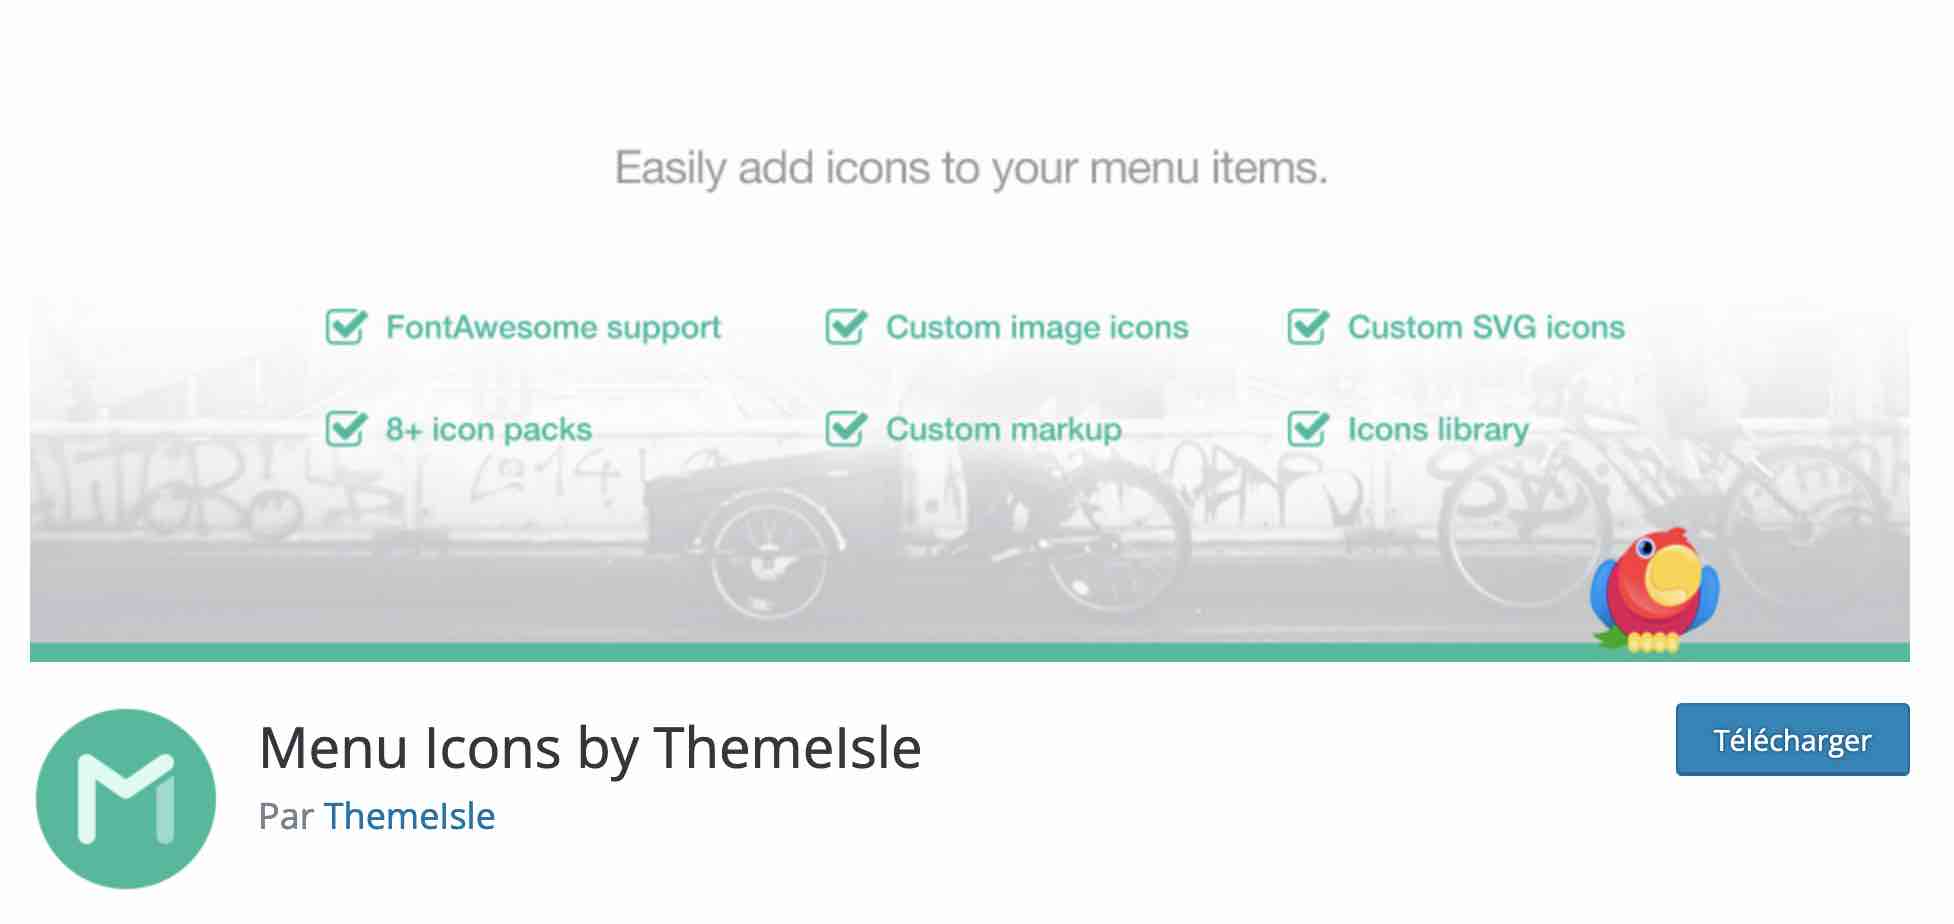 Menu Icons is a WordPress menu plugin that adds icons.